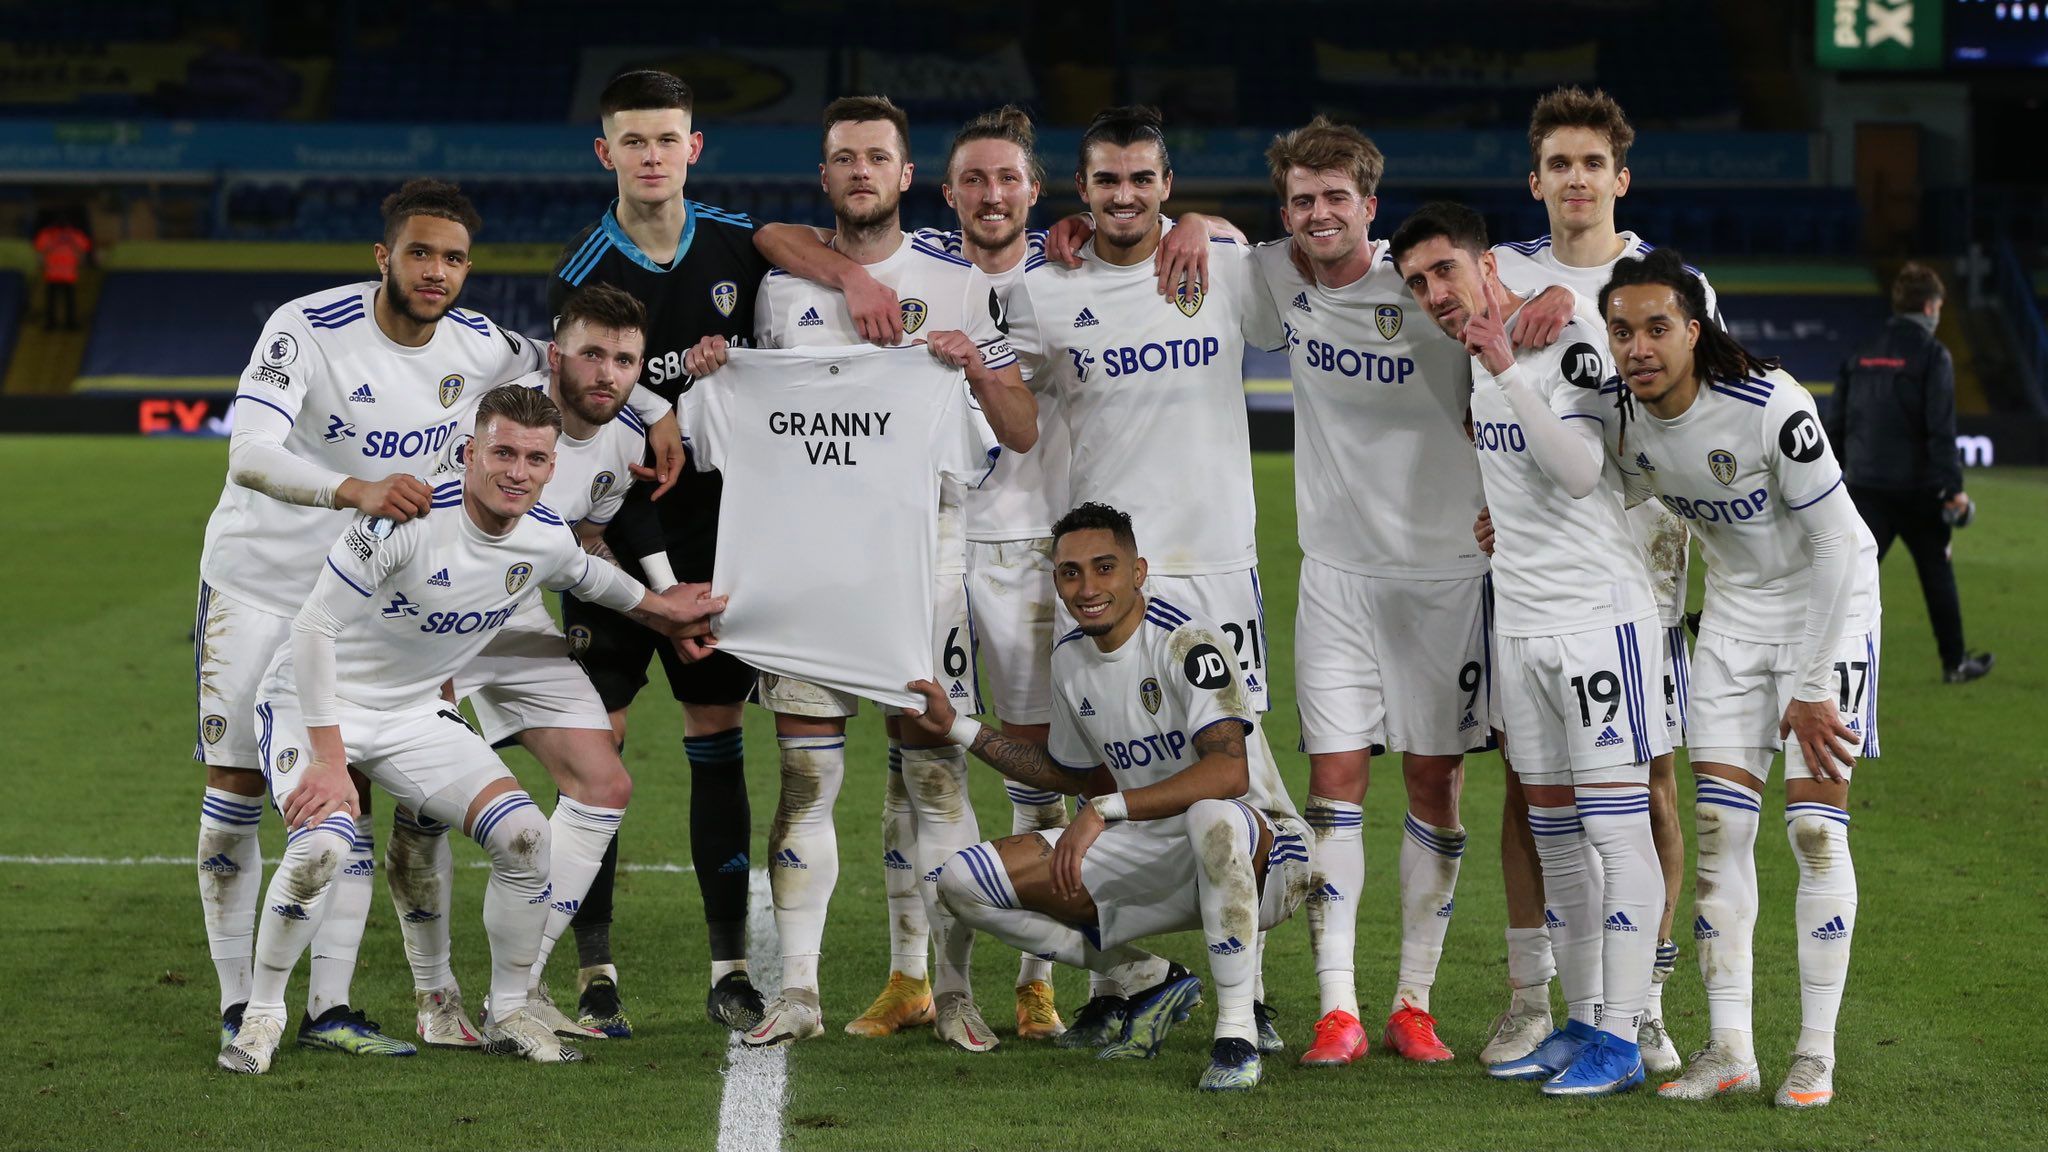 Premier League: Leeds United climb the league table after beating Southampton